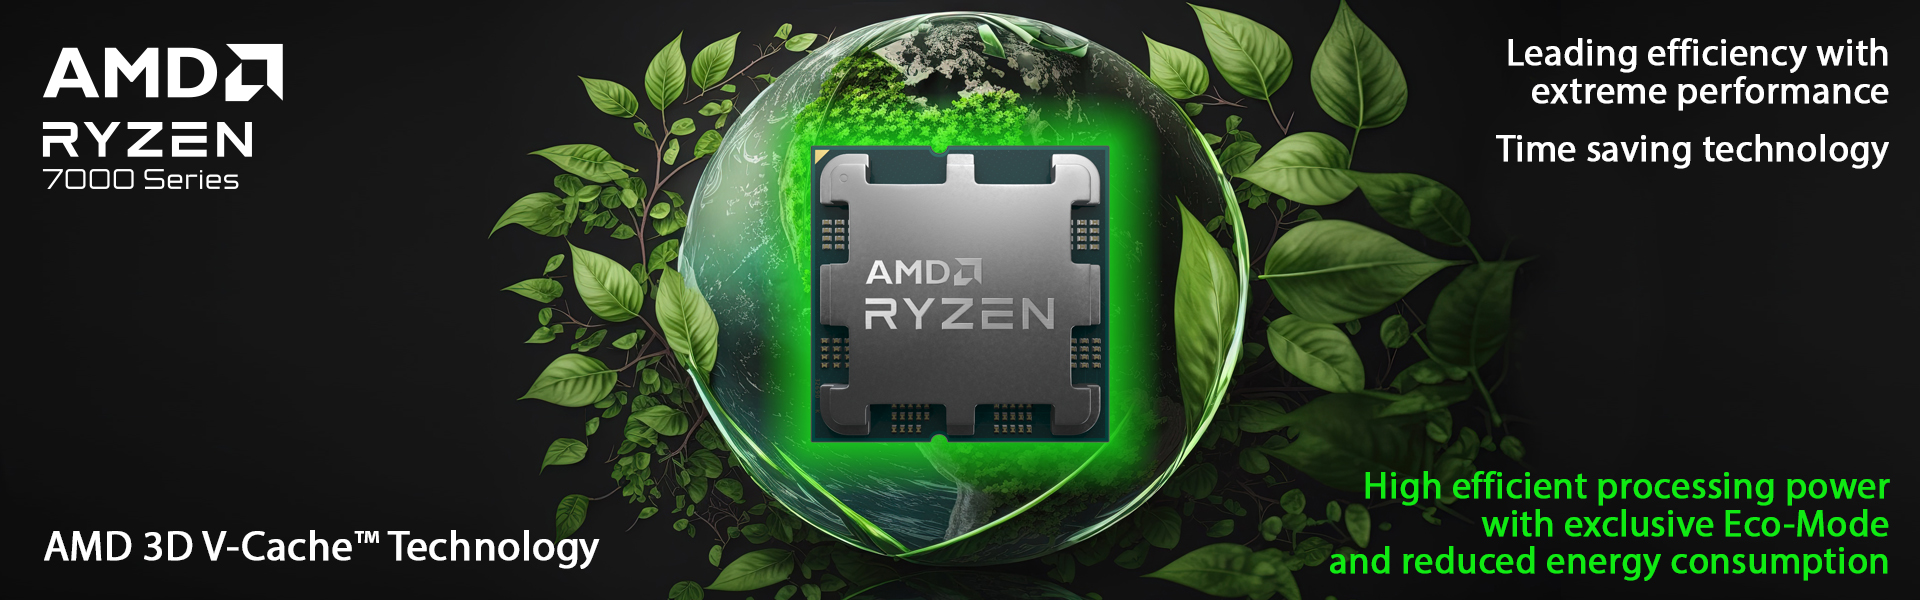 AMD Ryzen 7000 Series Desktop Processors with AMD 3D V-Cache